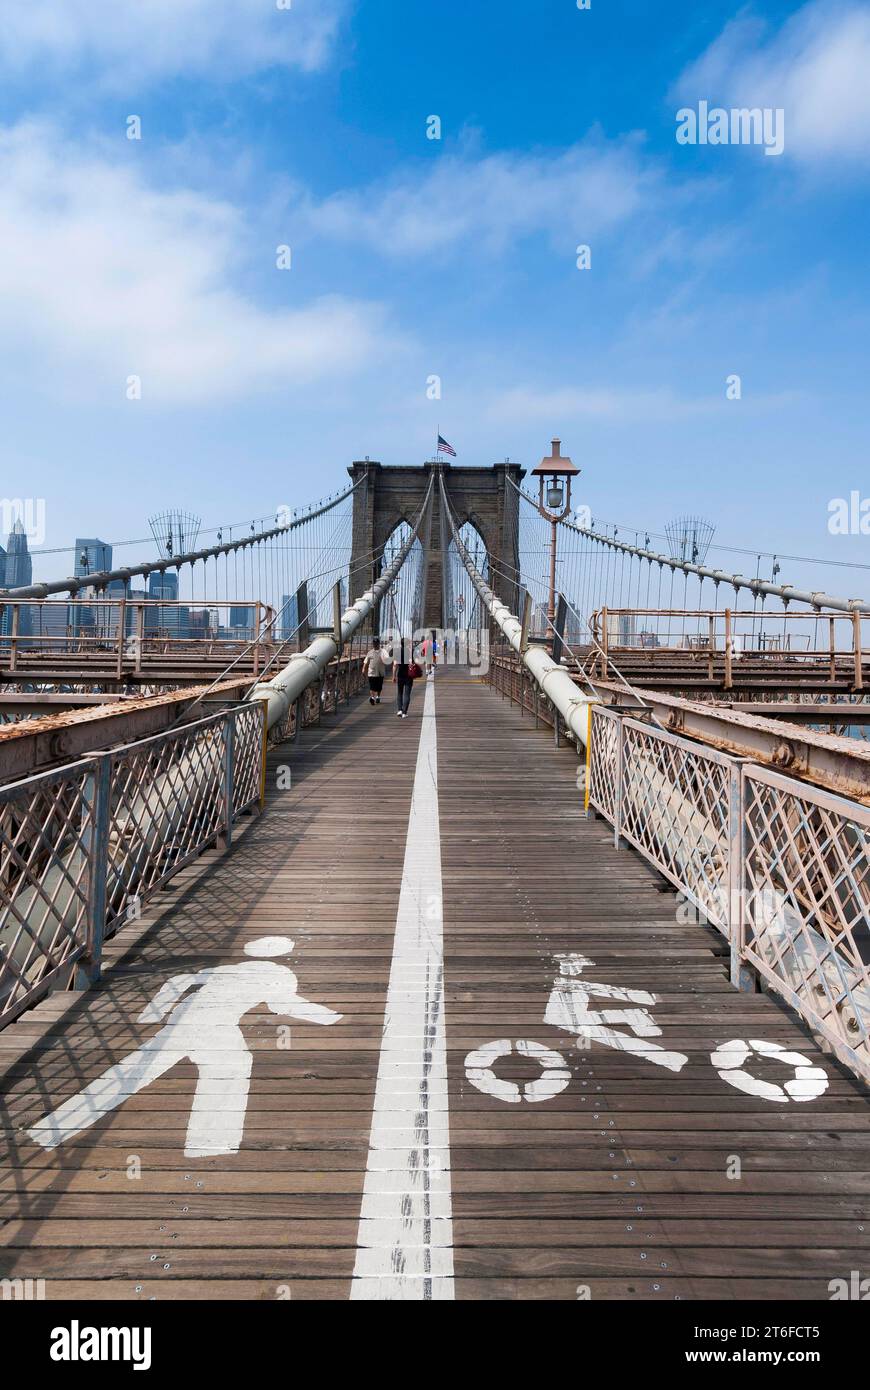 Pont de Brooklyn, sentier, croisement, circulation, Manhattan, New York, États-Unis Banque D'Images